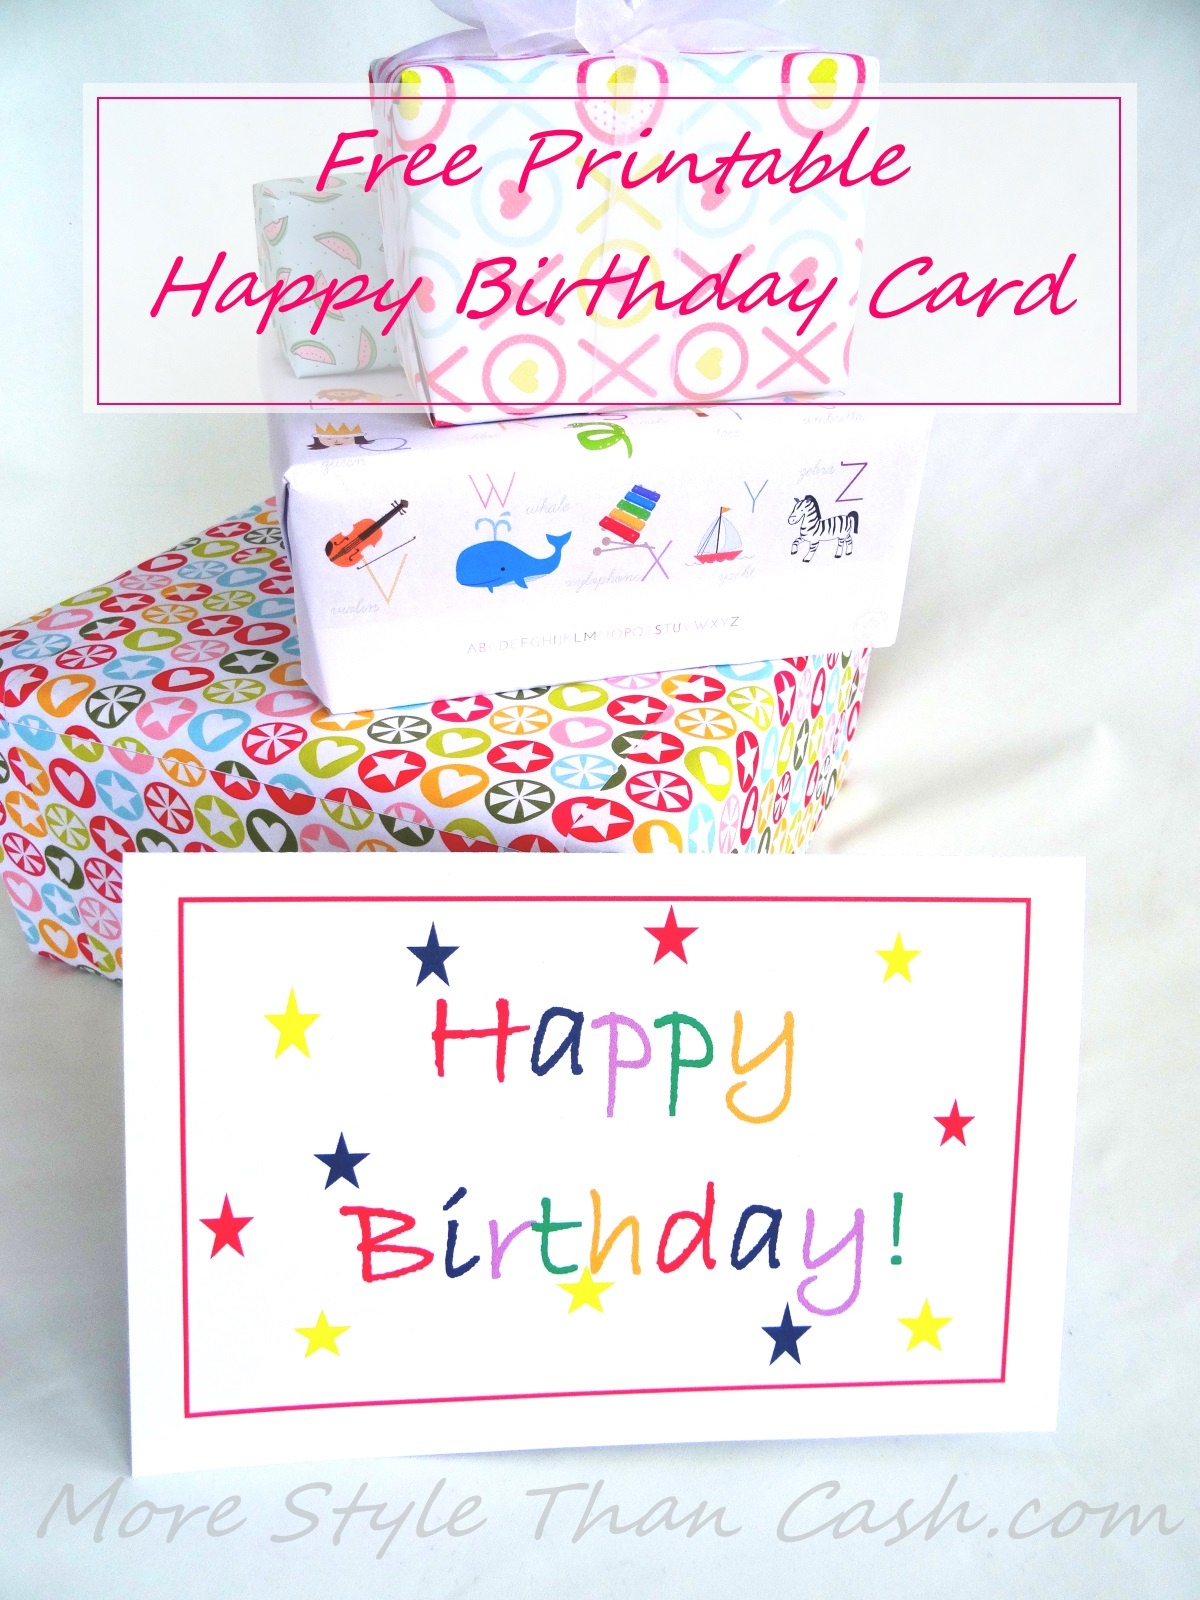 Free Printable Money Cards For Birthdays Free Printable